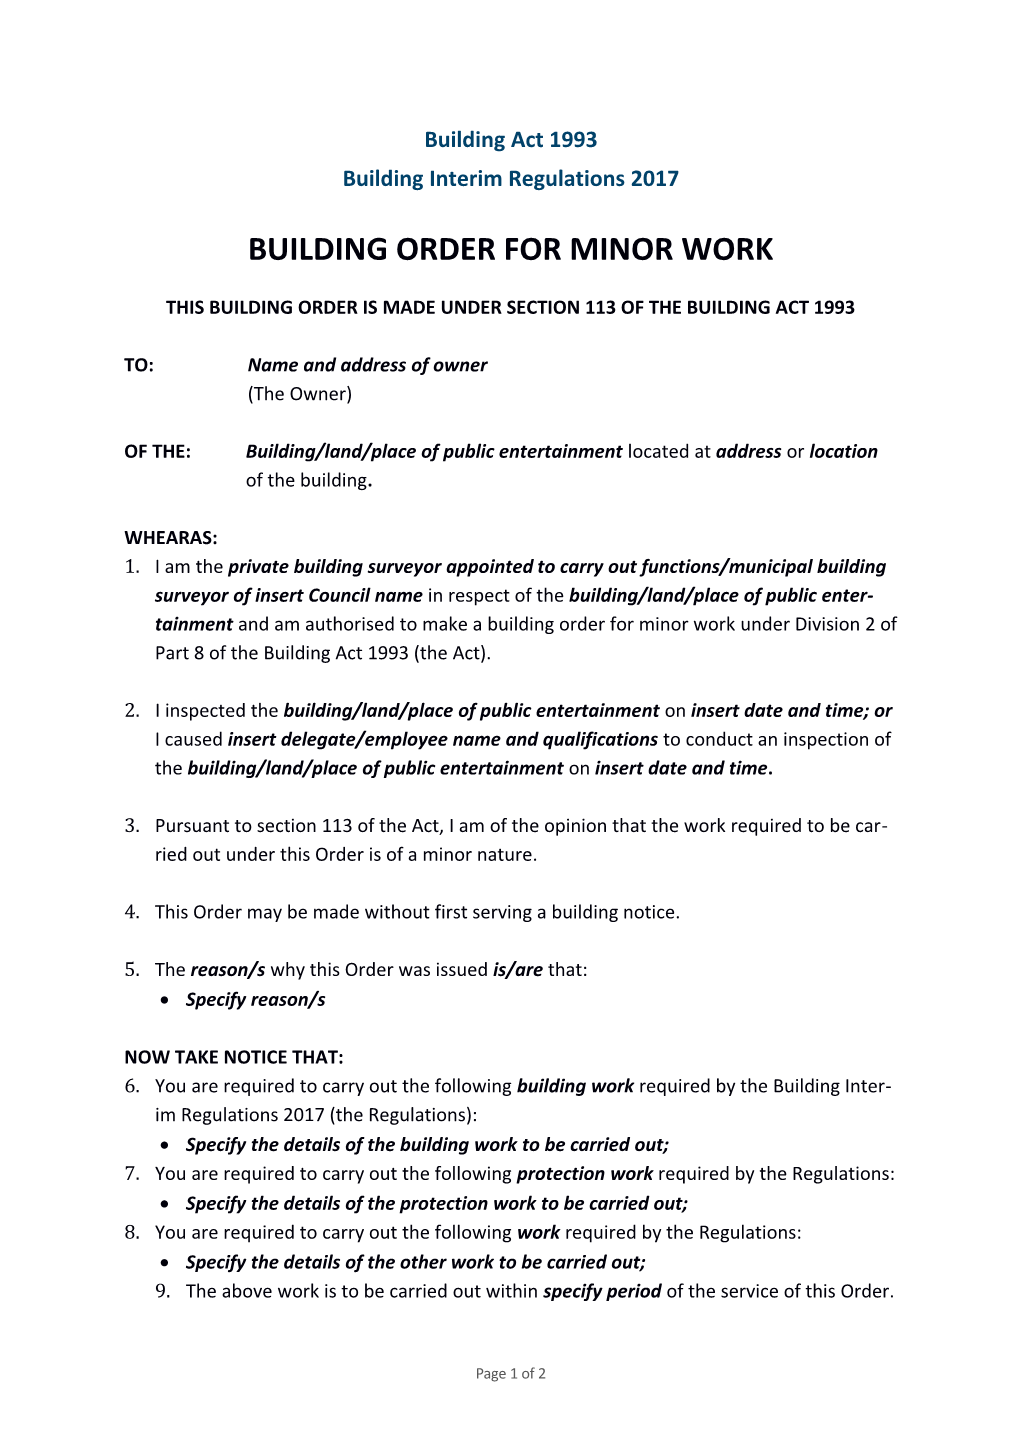 Building Order for Minor Work